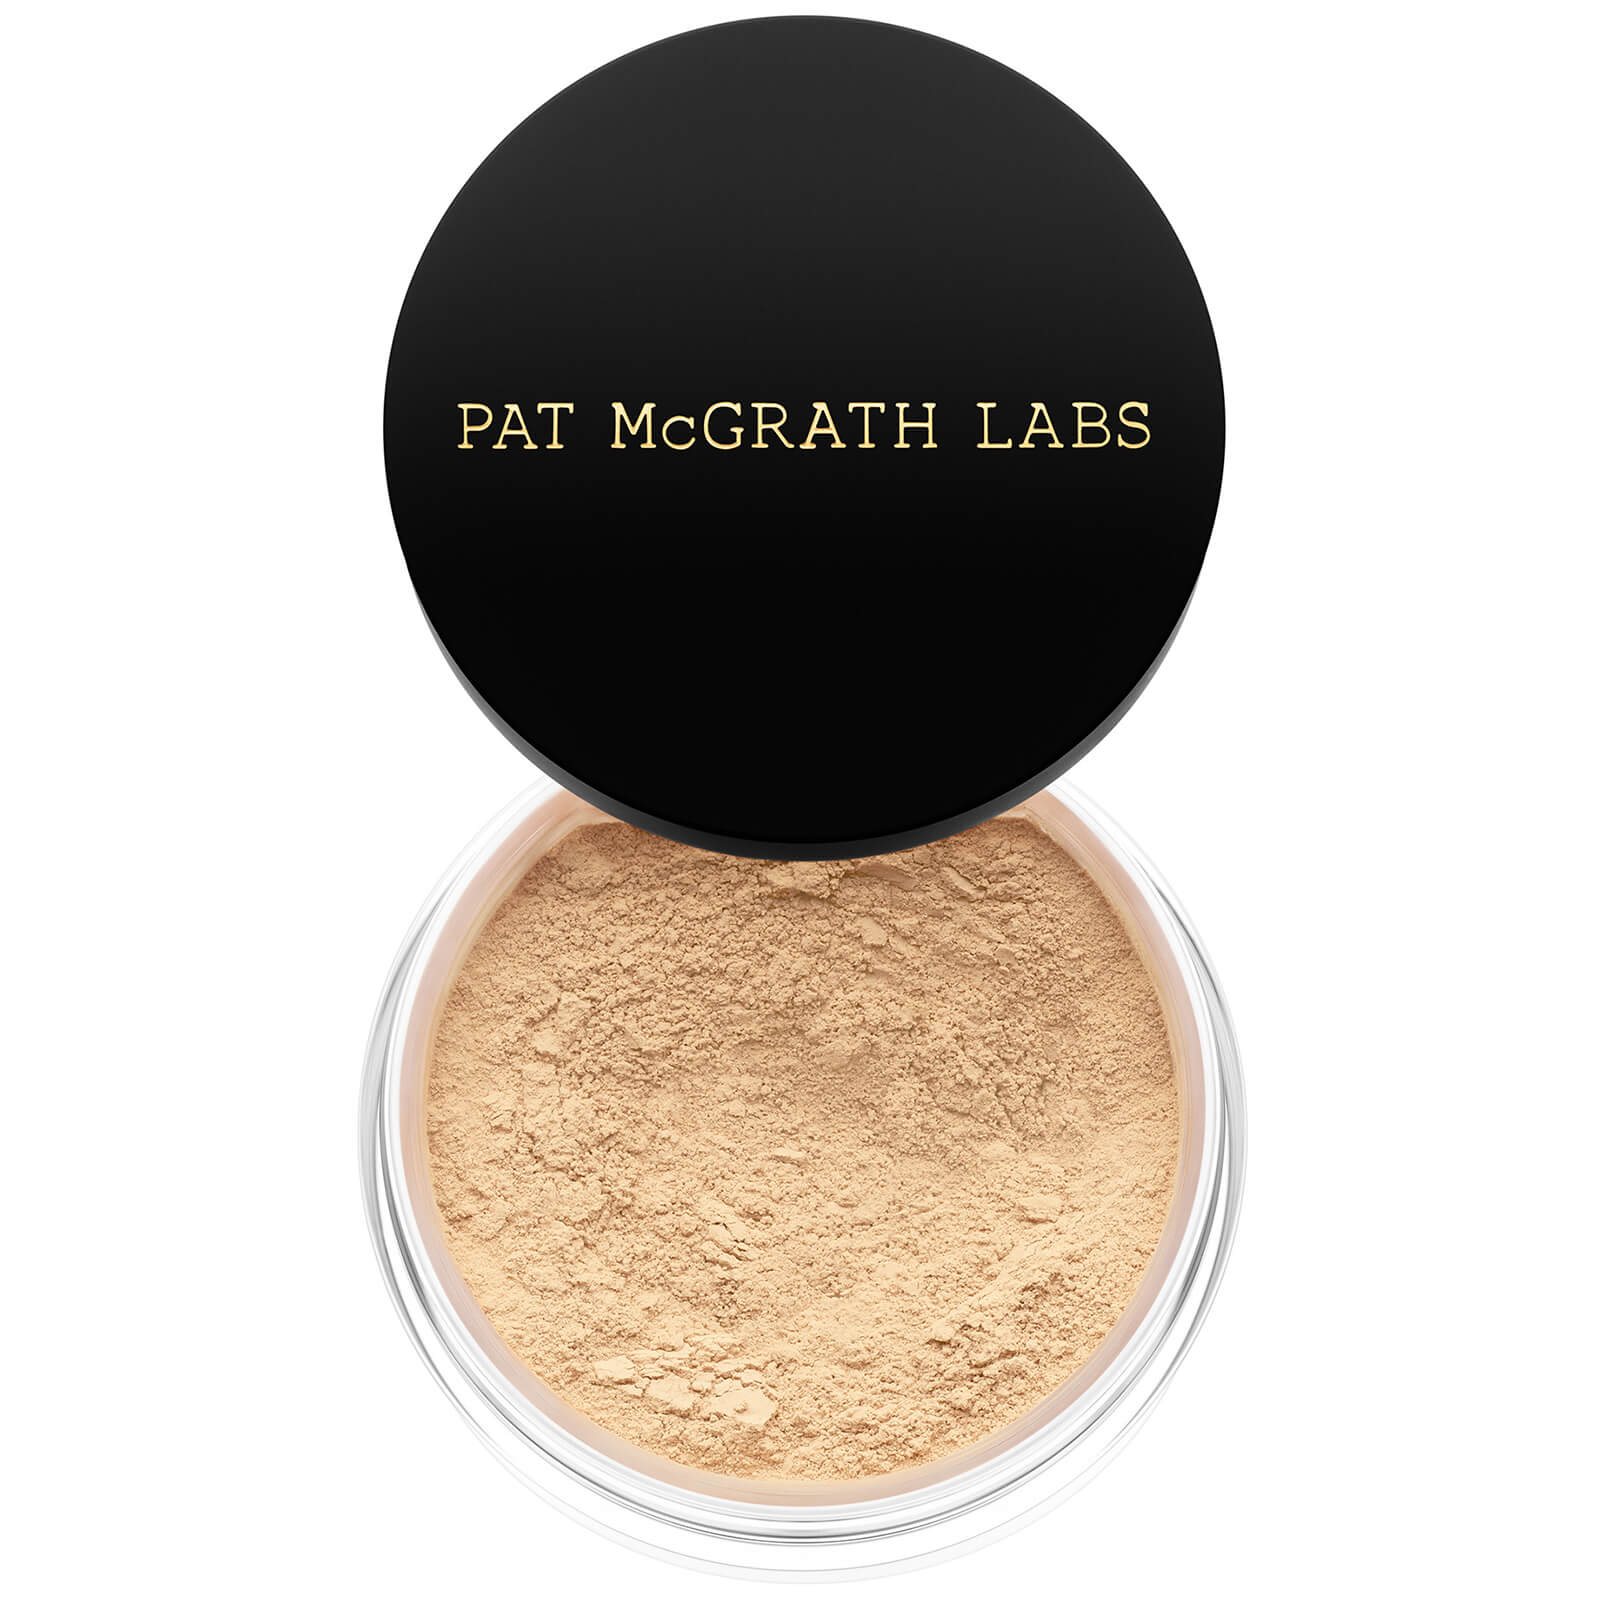 Pat McGrath Labs Skin Fetish: Sublime Perfection Setting Powder 8.5g (Various Shades) - Light Medium